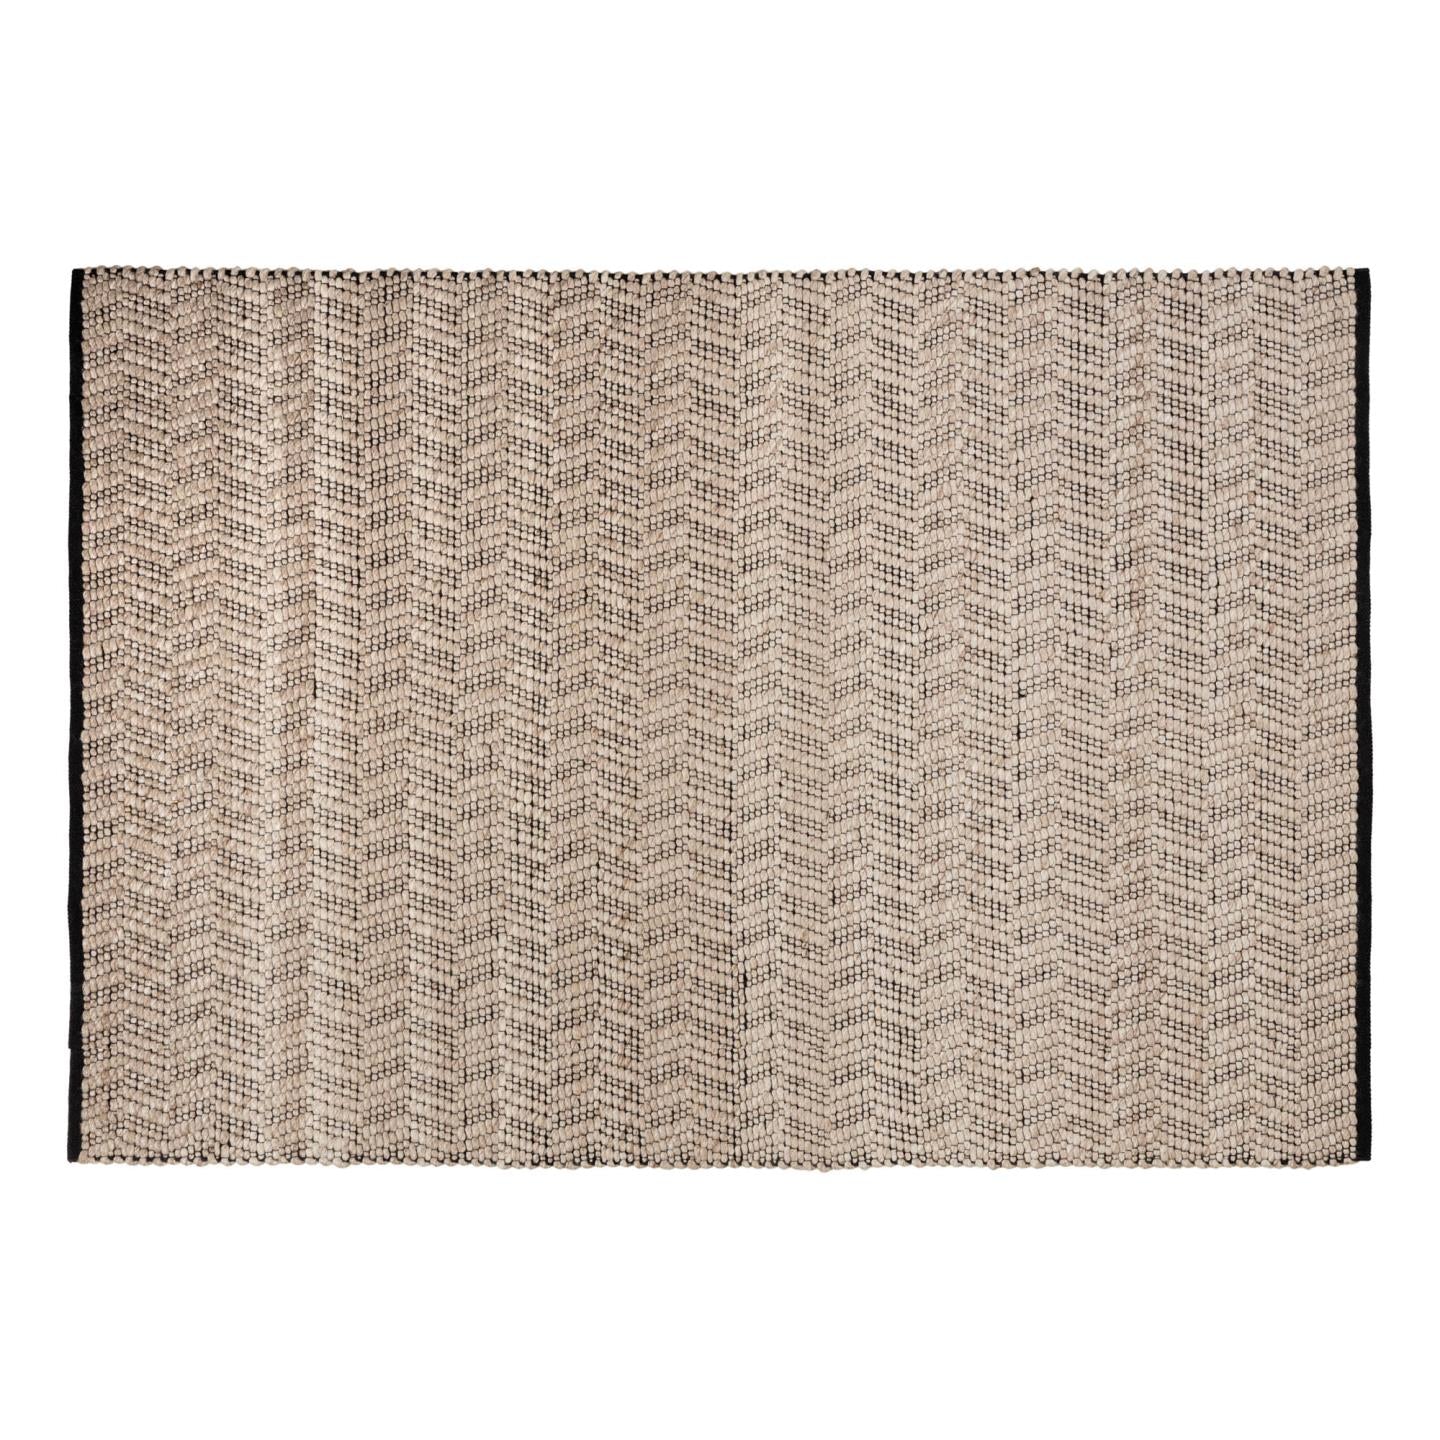 Neida szőnyeg, barna gyapjú, 160 x 230 cm